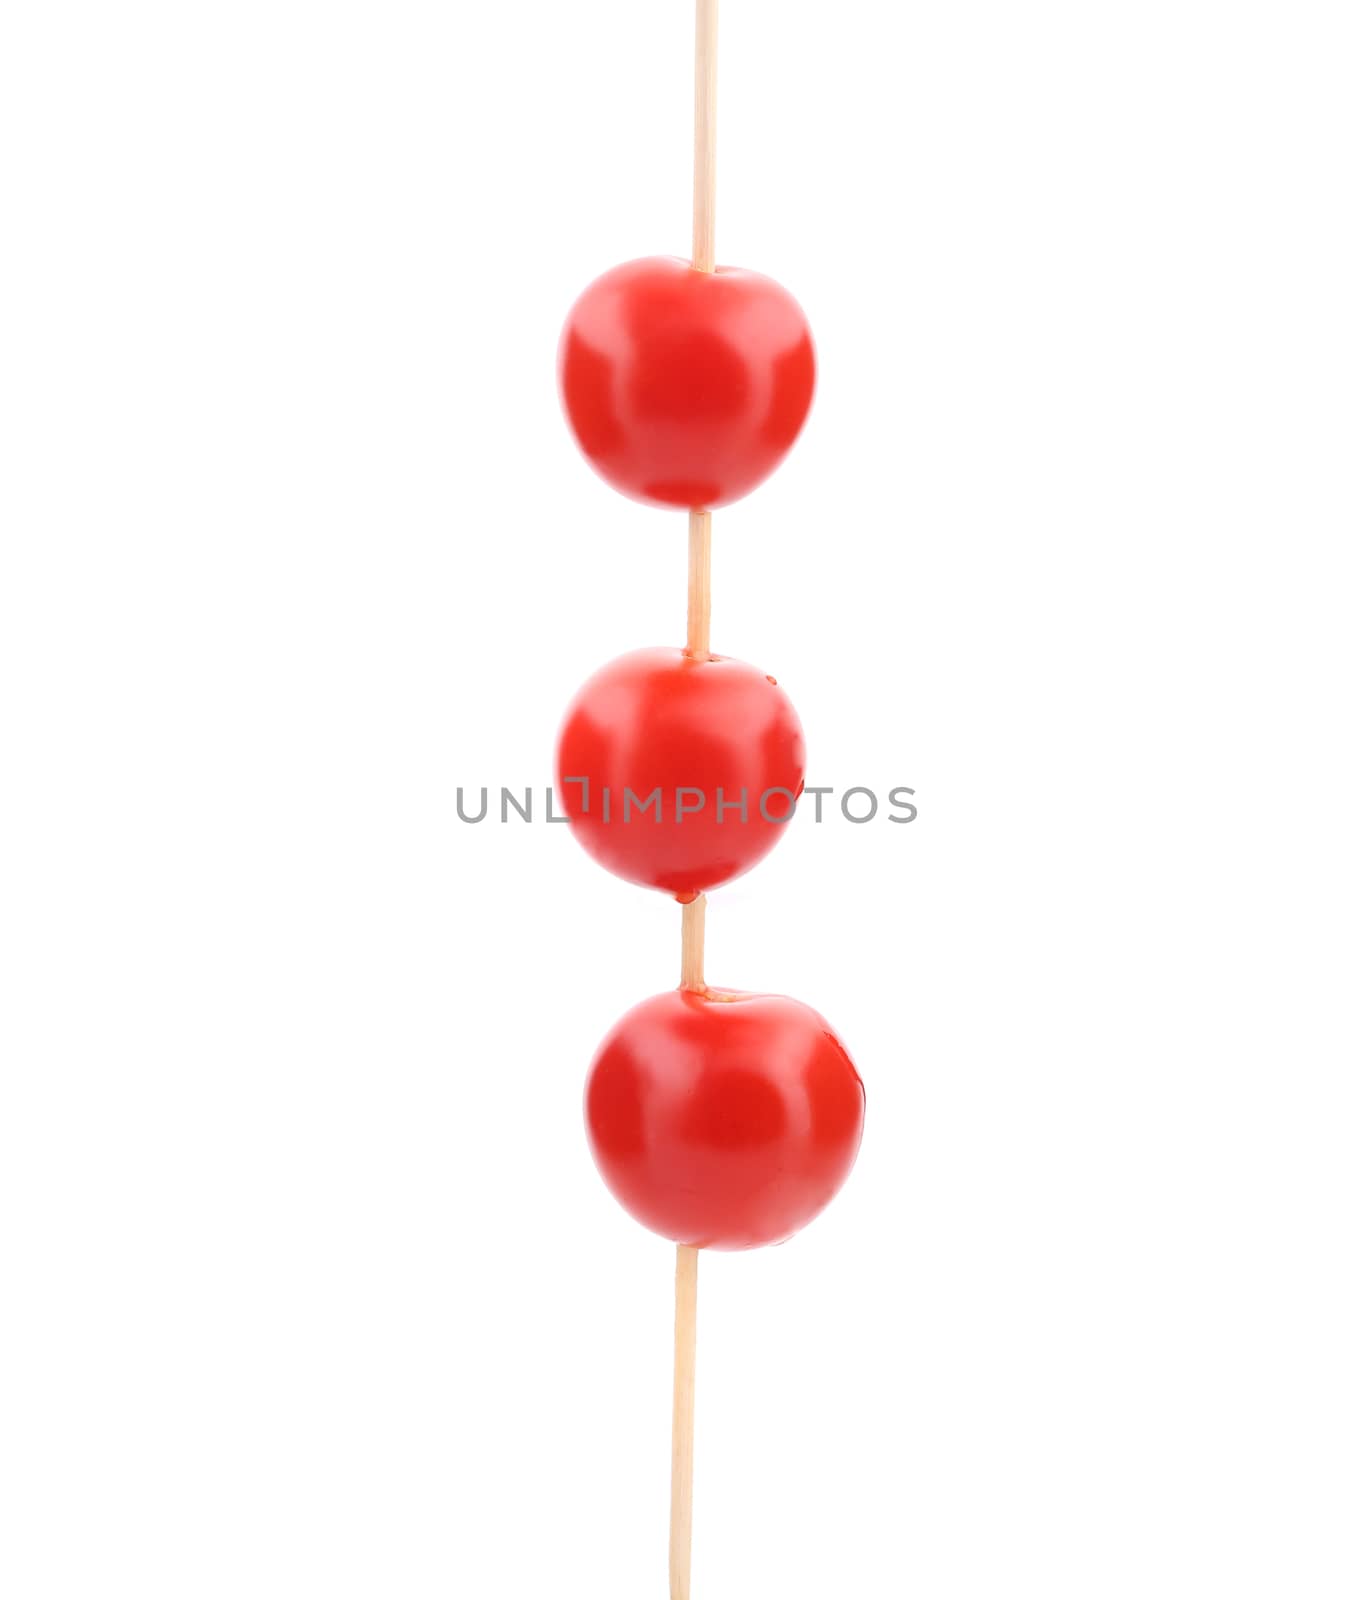 Three cherry tomatoes on stick. by indigolotos